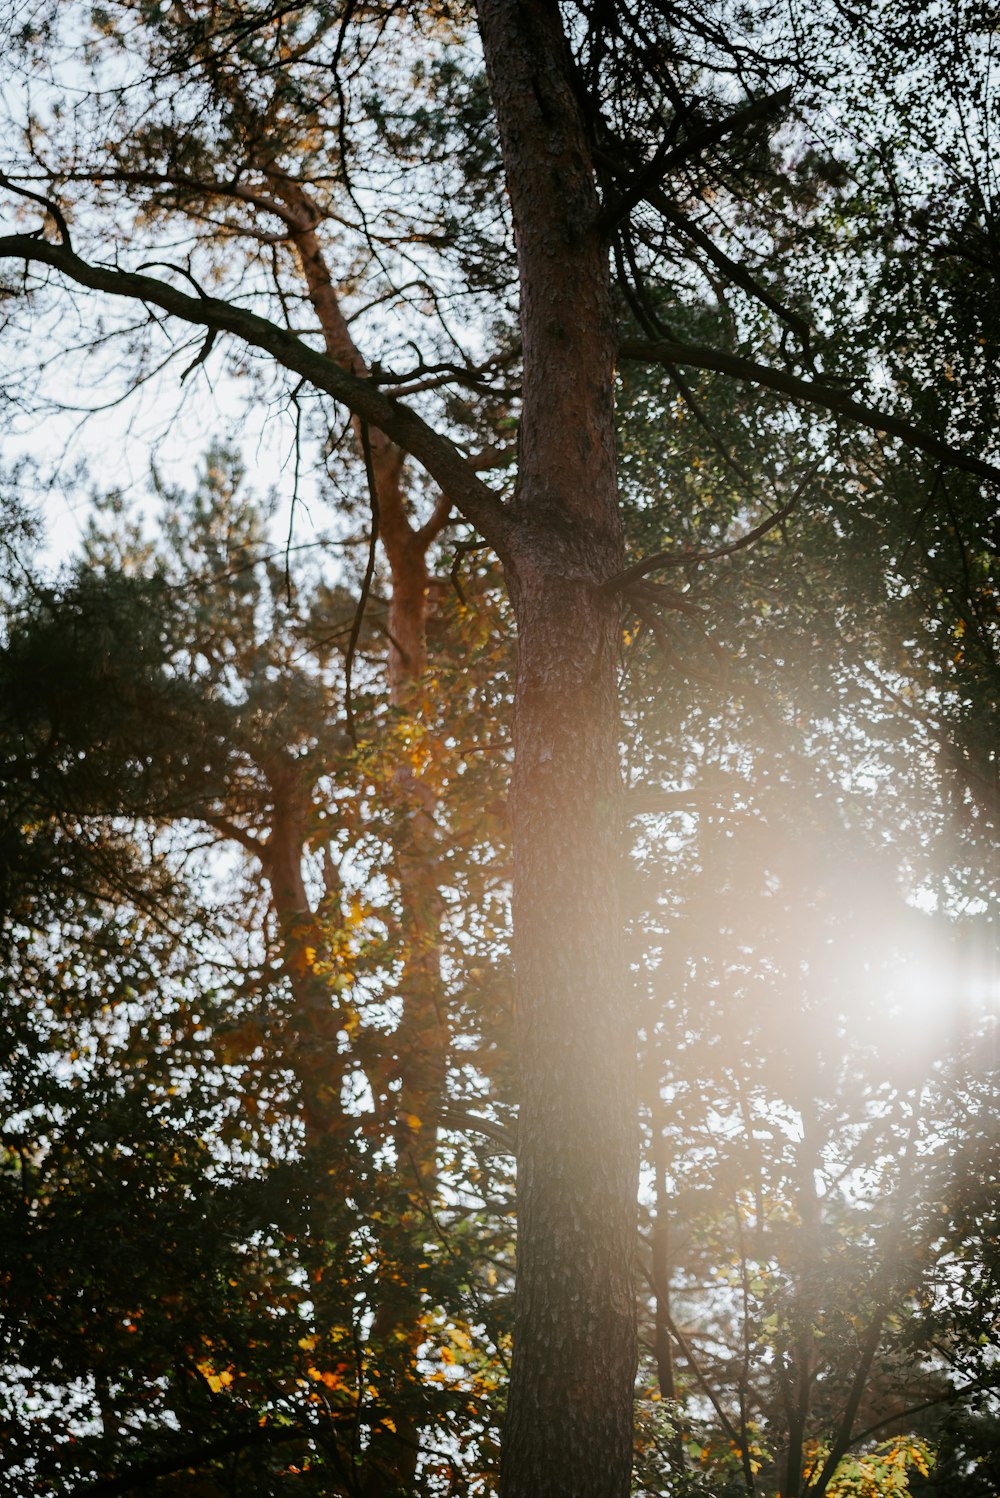 sunlight piercing through trees during daytime